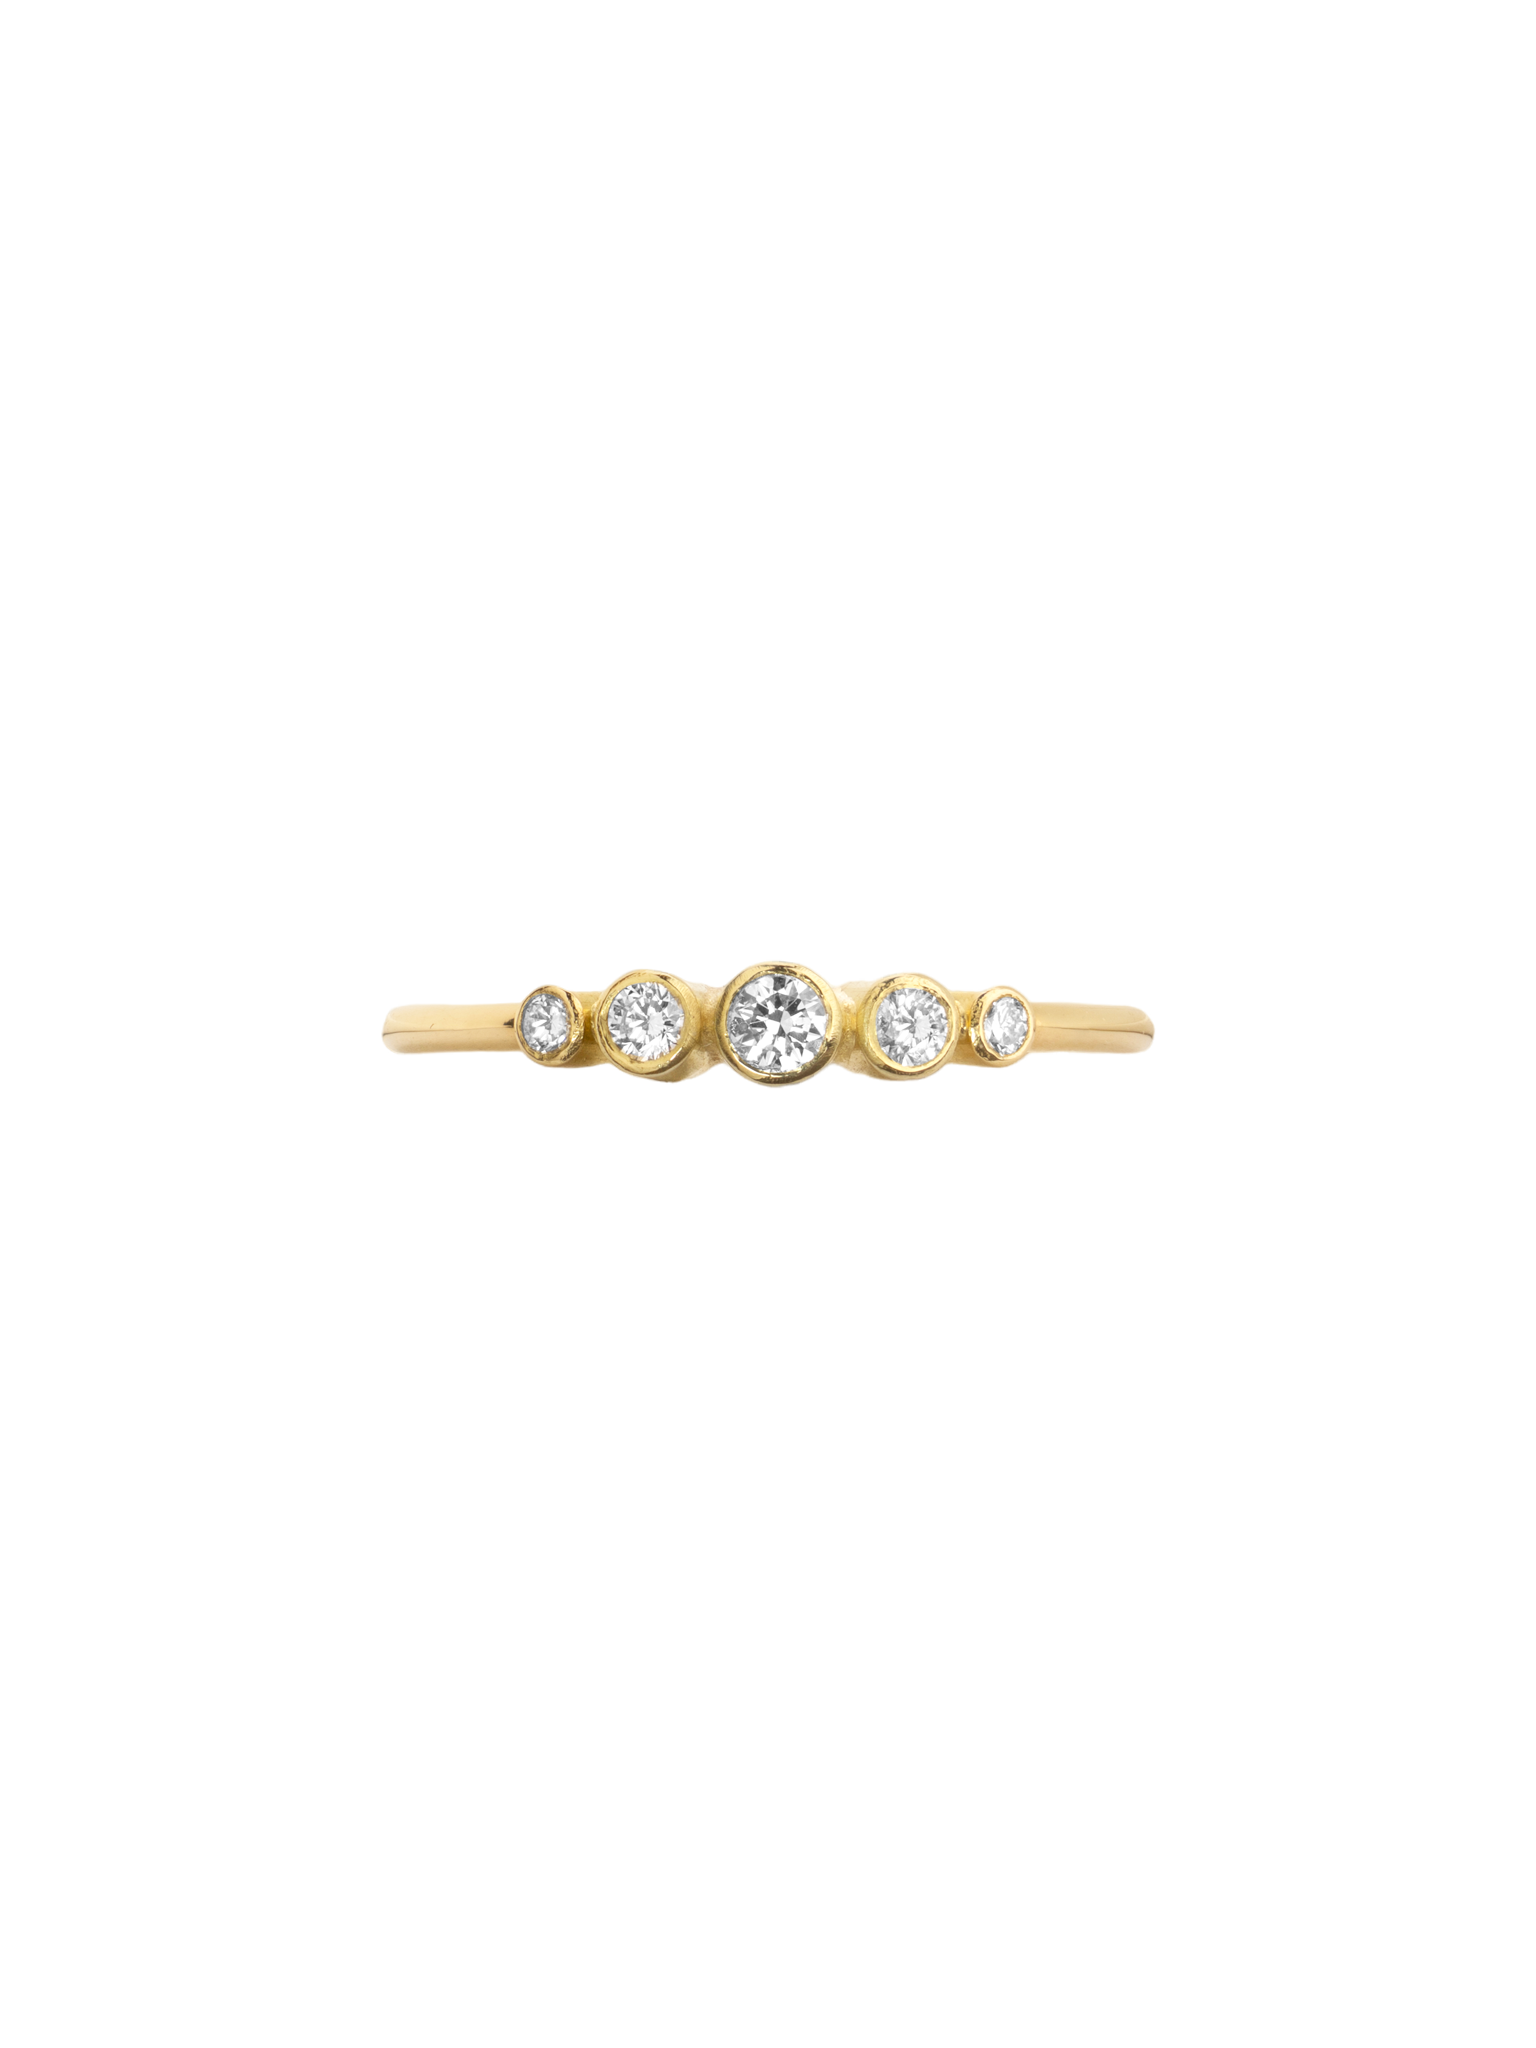 St Germain five diamond ring